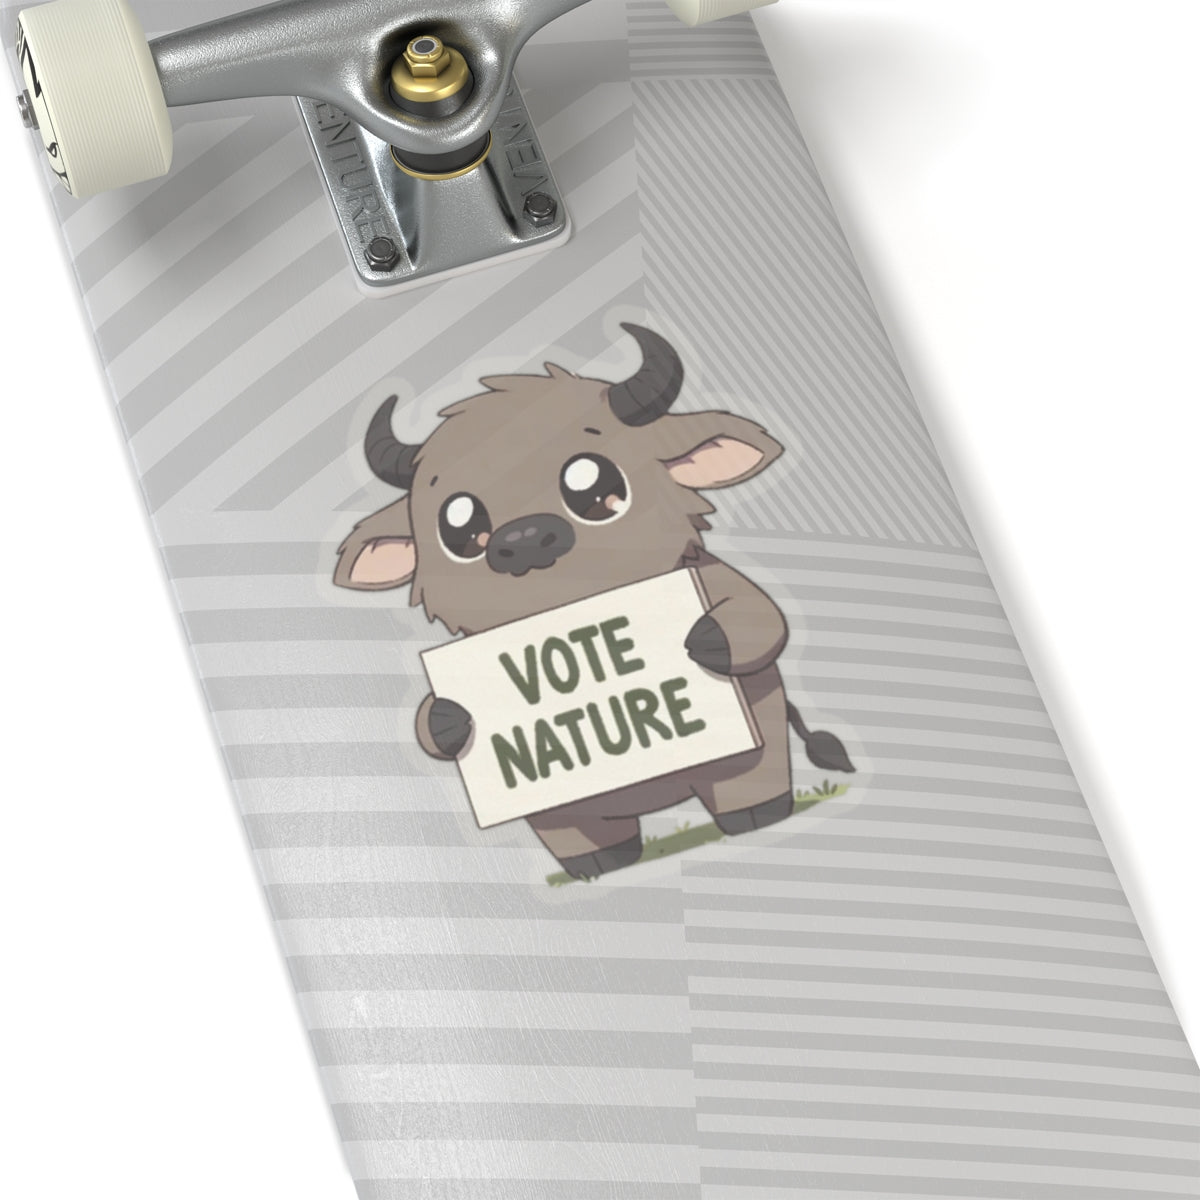 Inspirational Cute Water Buffalo Statement vinyl Sticker: Vote Nature! laptop, kindle, phone, ipad, instrument case, notebook, mood board